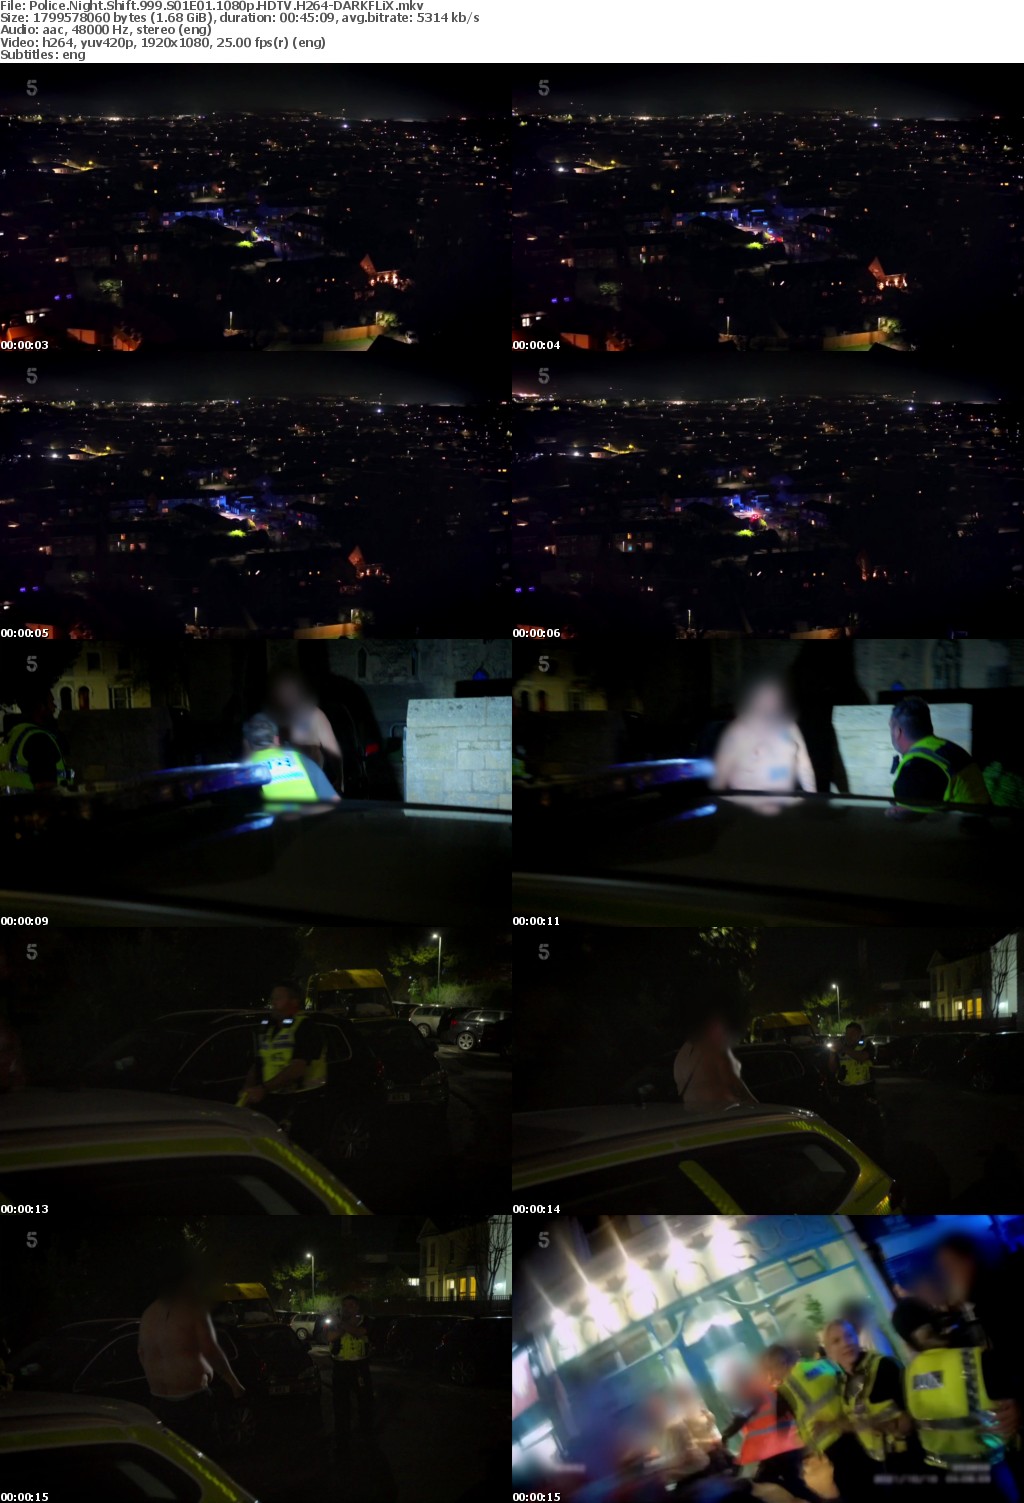 Police Night Shift 999 S01E01 1080p HDTV H264-DARKFLiX